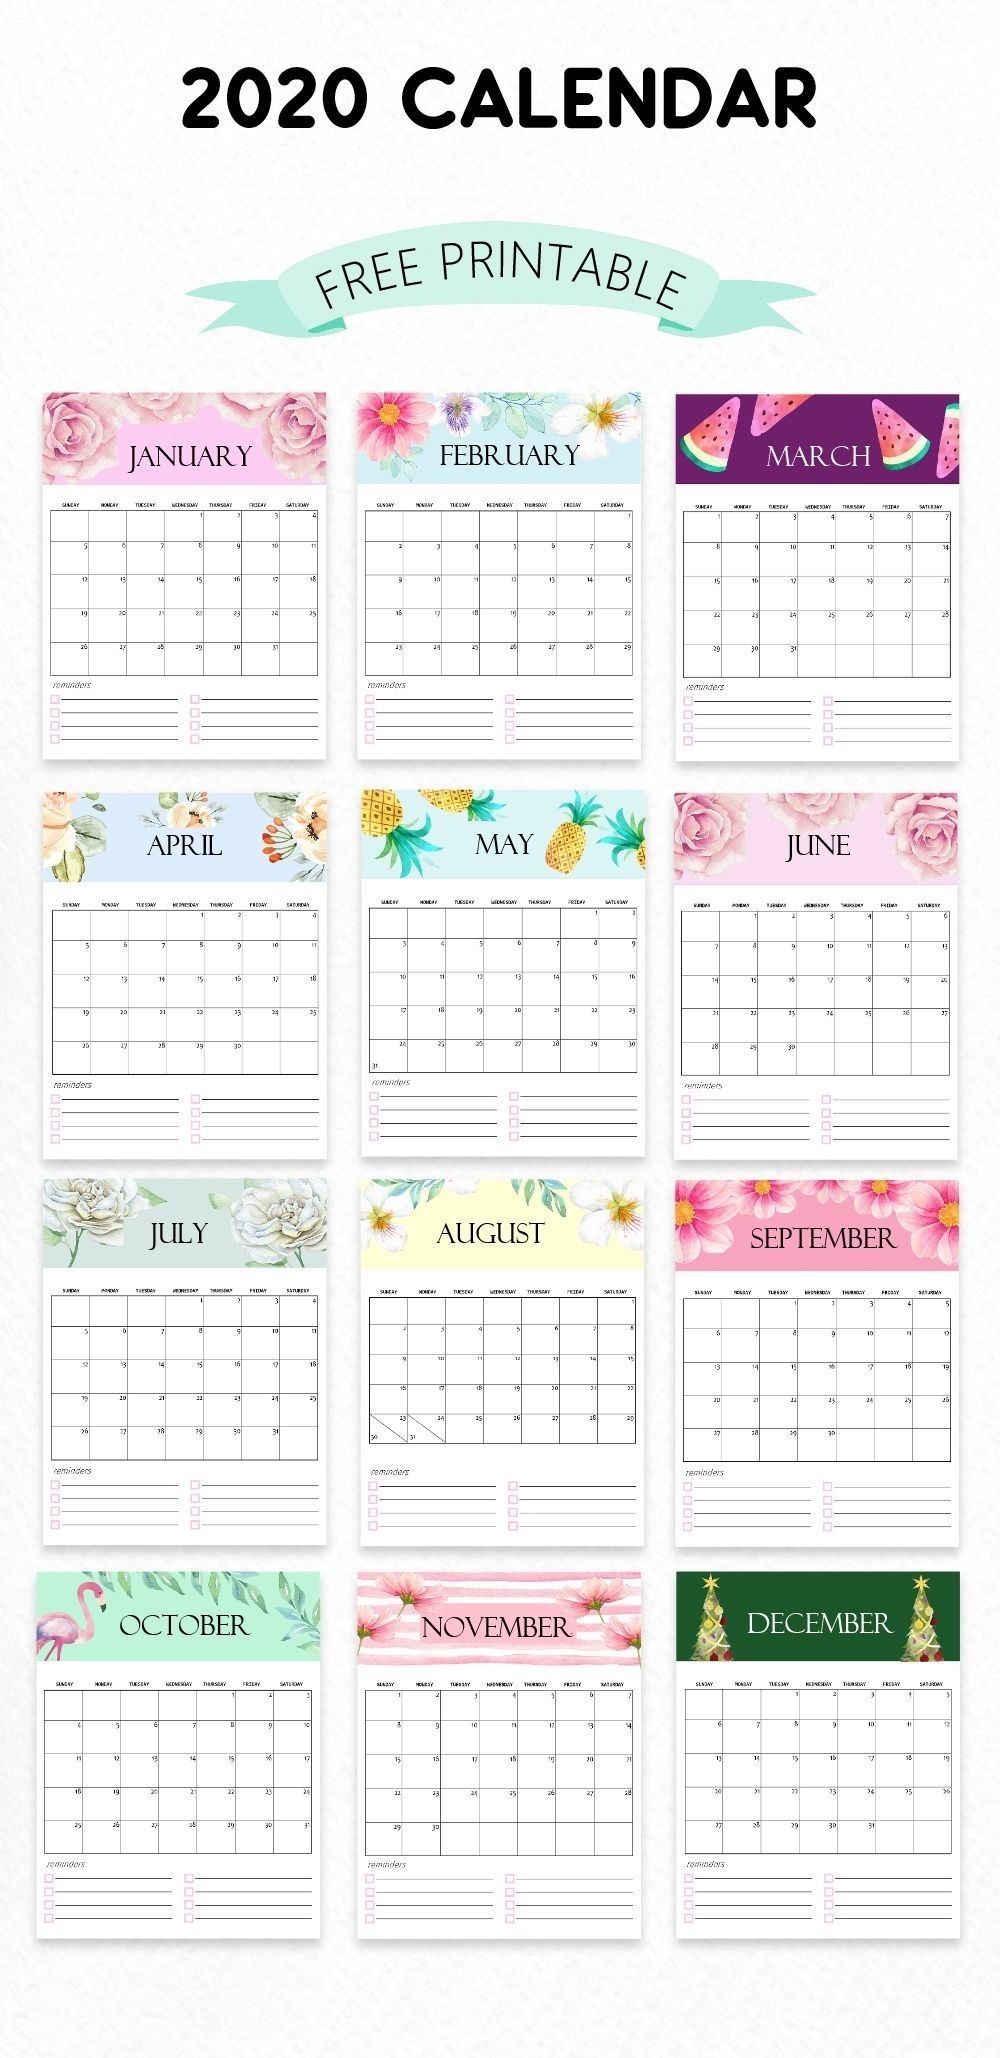 300 Calendars ideas